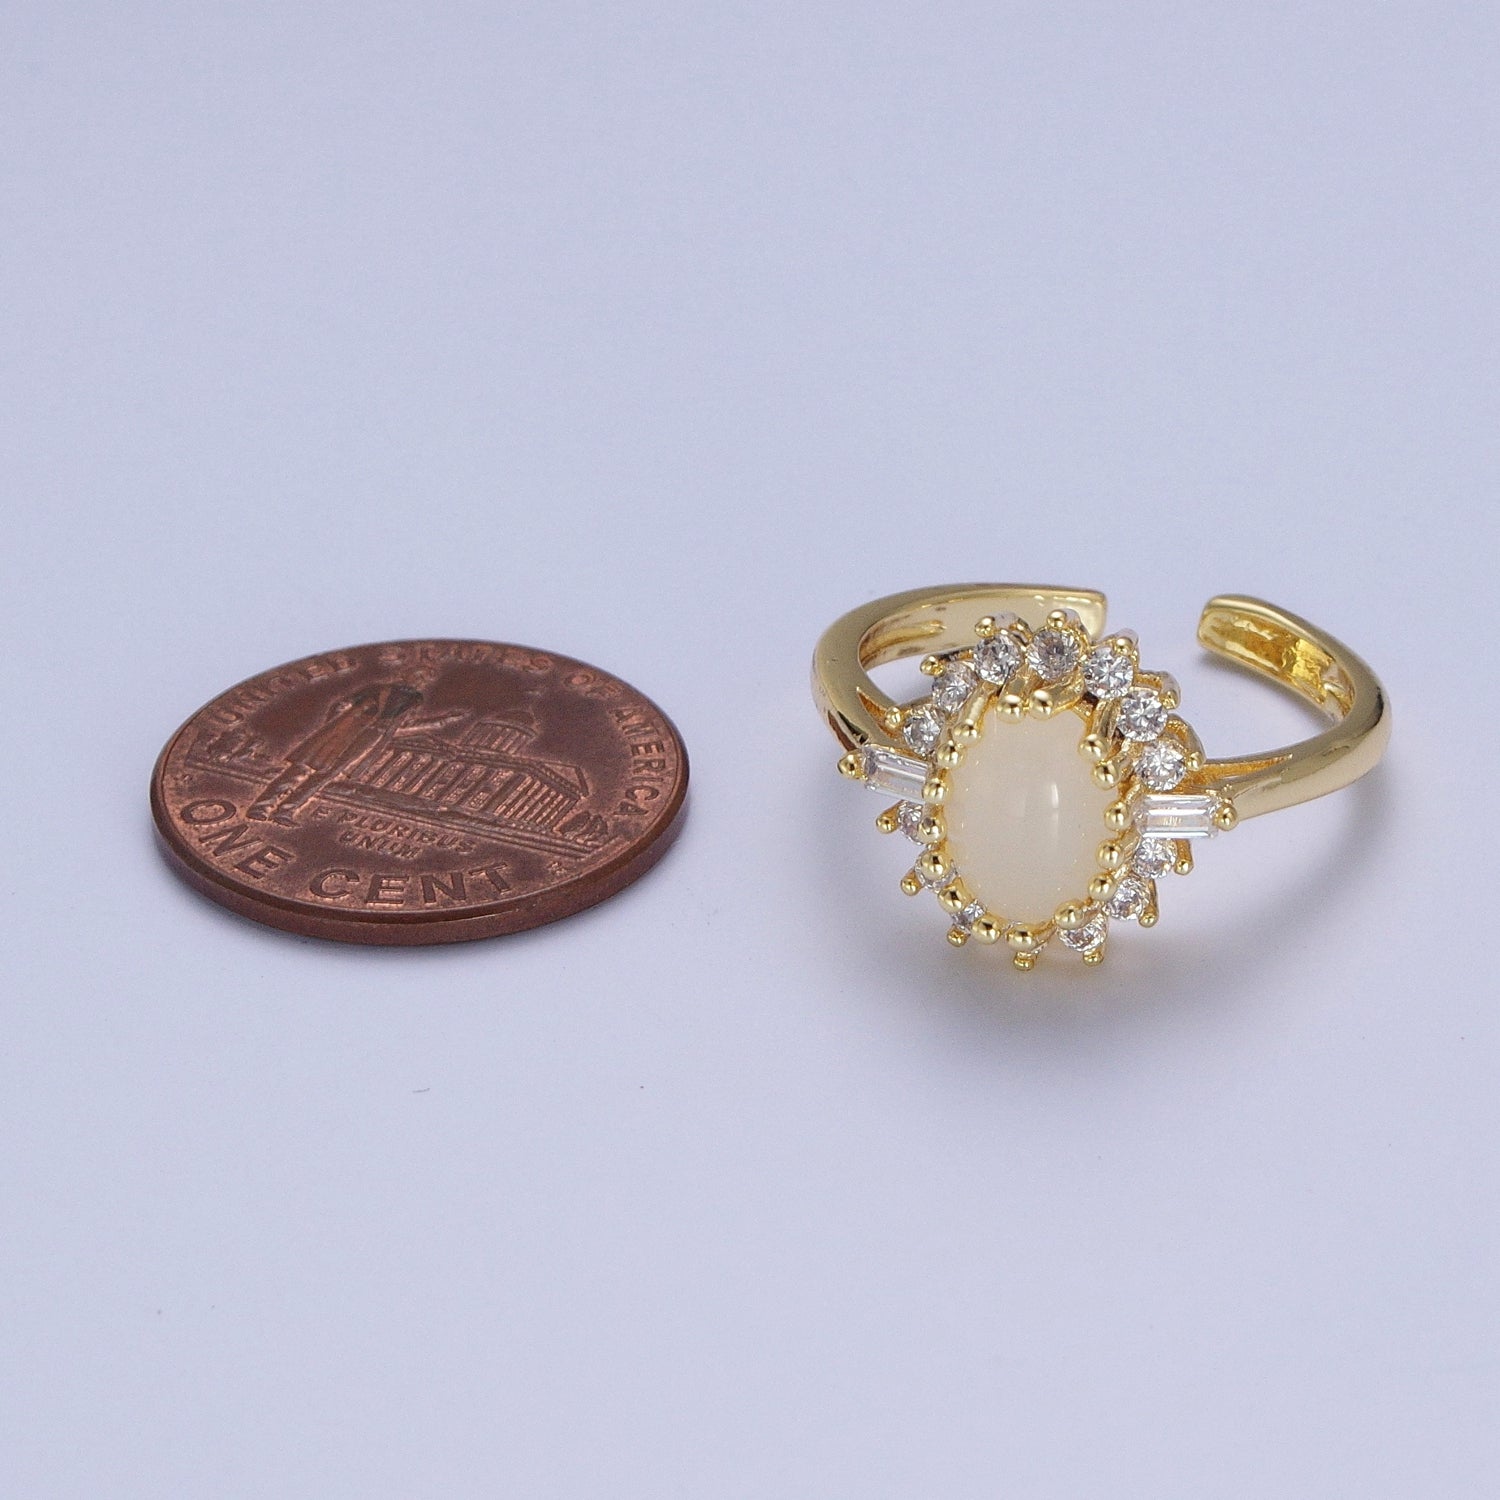 Gold White Gemstone Clear Cubic Zirconia Celestial Sun Flower Adjustable Ring S-247 - DLUXCA